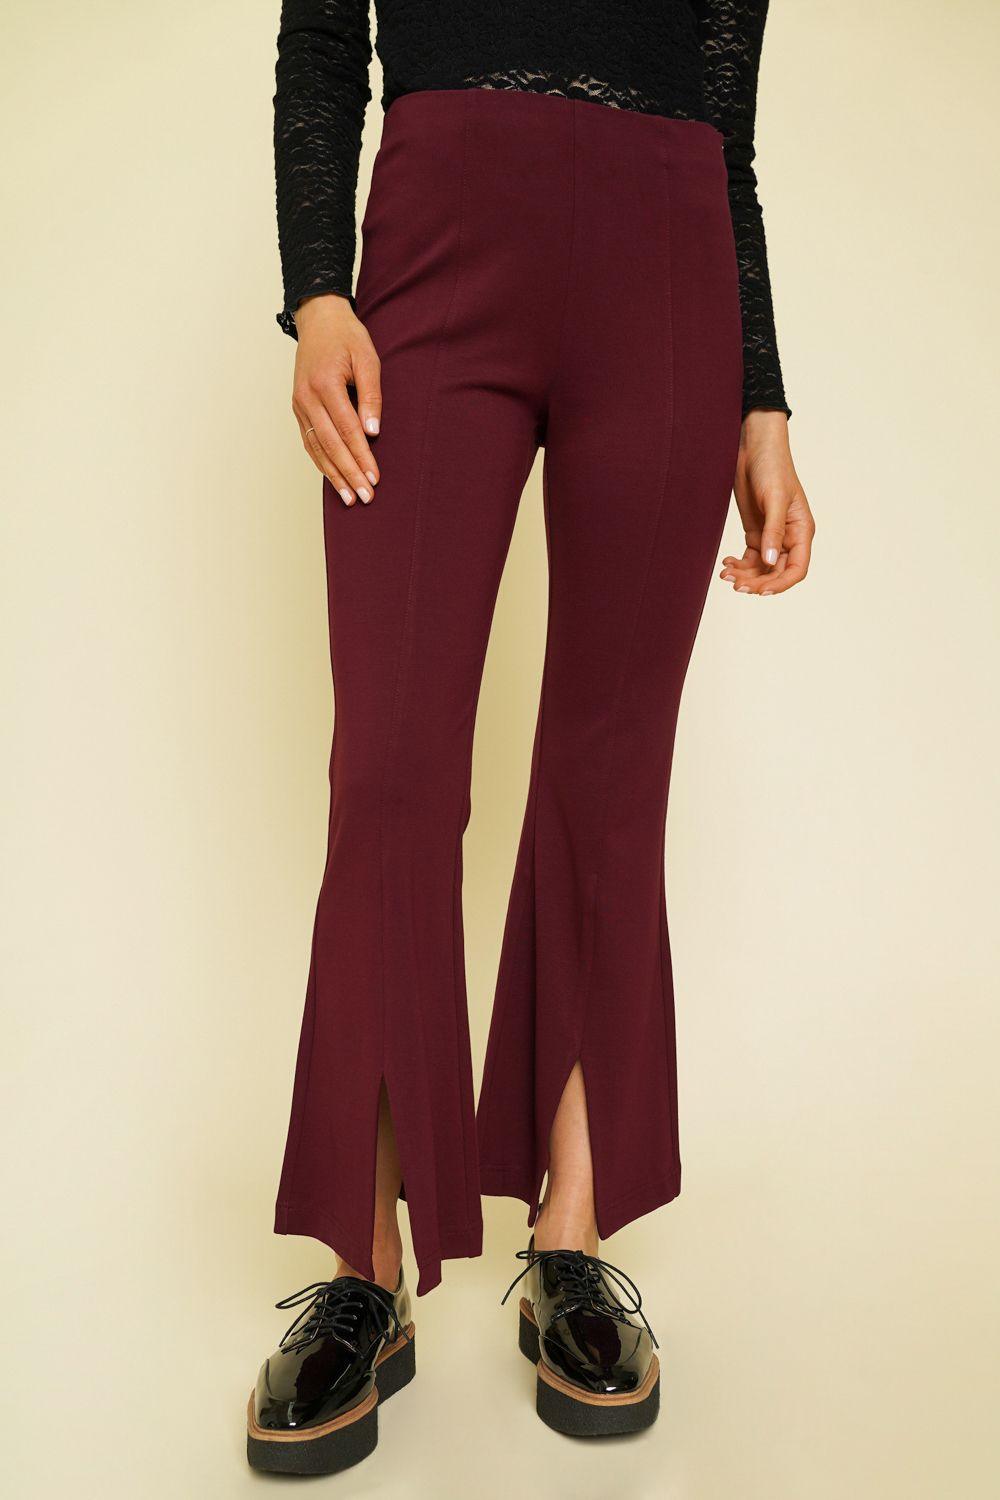 Buy Trusha Dresses Pack of 2 Cotton Lycra Solid cigaratte Pants | Women  Kurti Pant/Stretchable Cigarette Pants Trousers | Potli, Bundi Pants | 2  Side Pocket (L, Black-Maroon) at Amazon.in